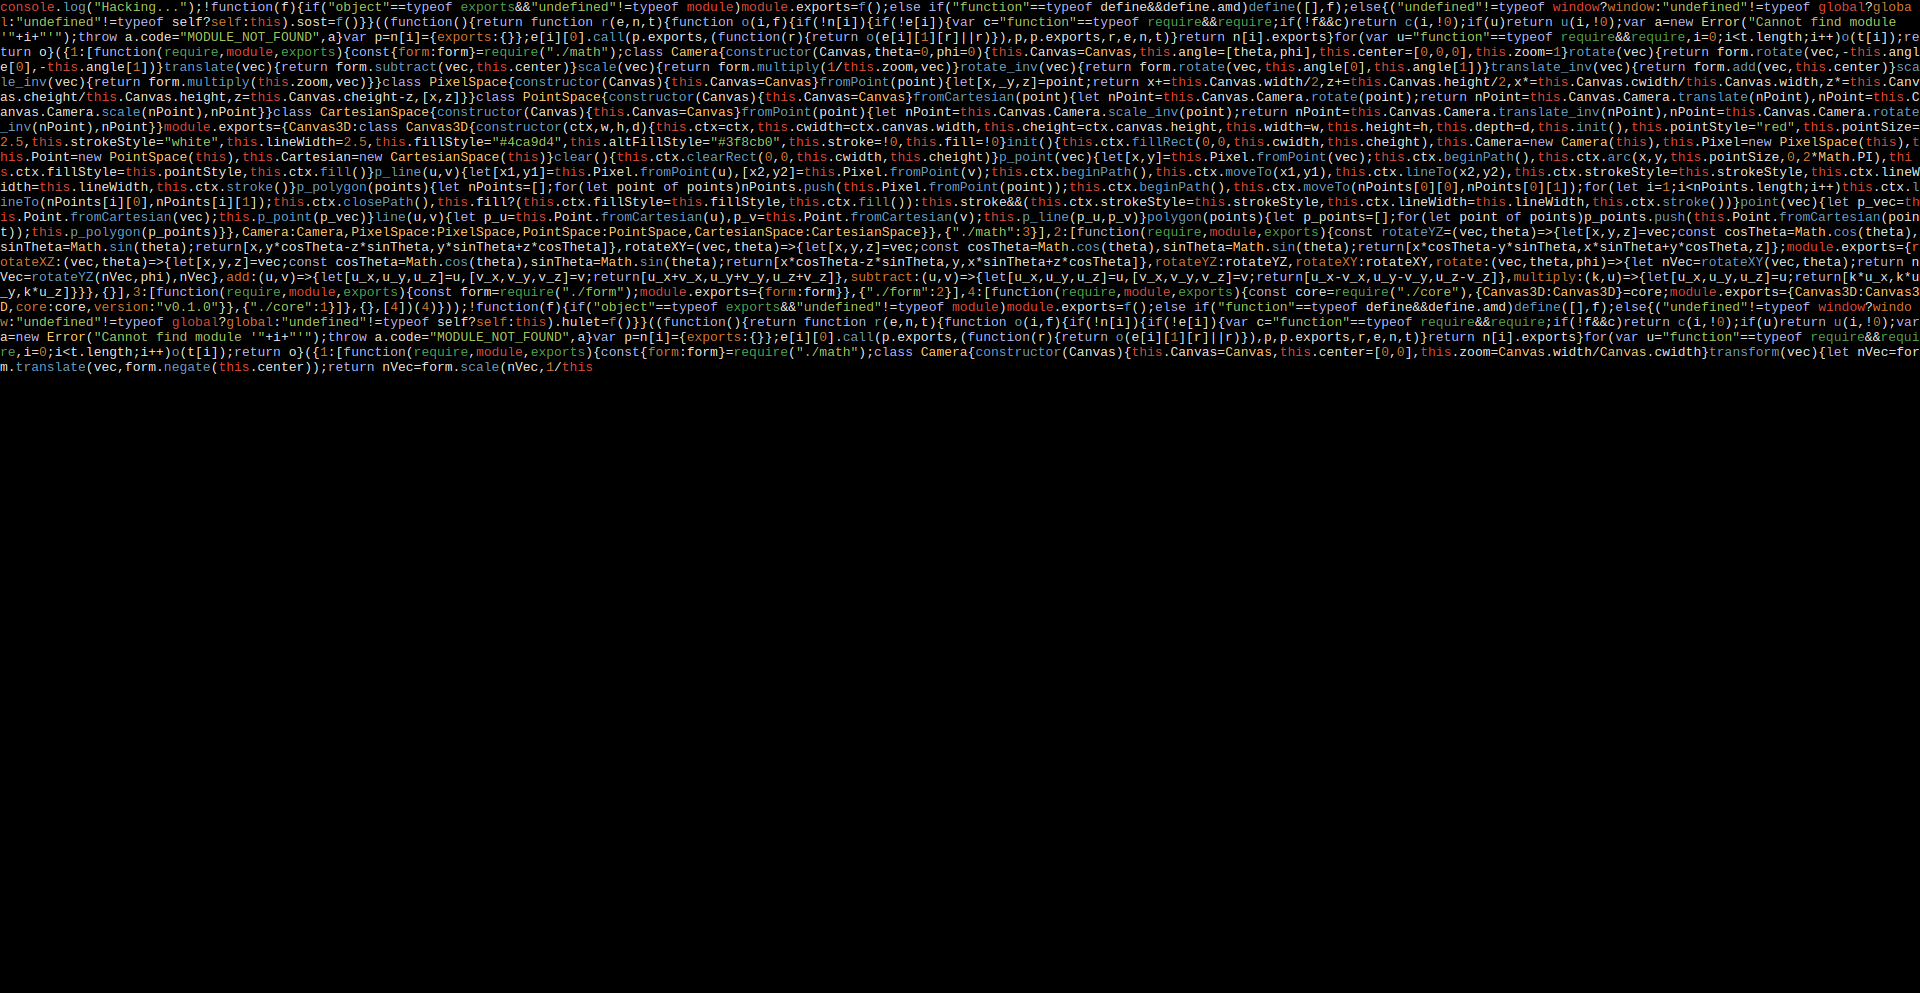 random code scrolls across a page